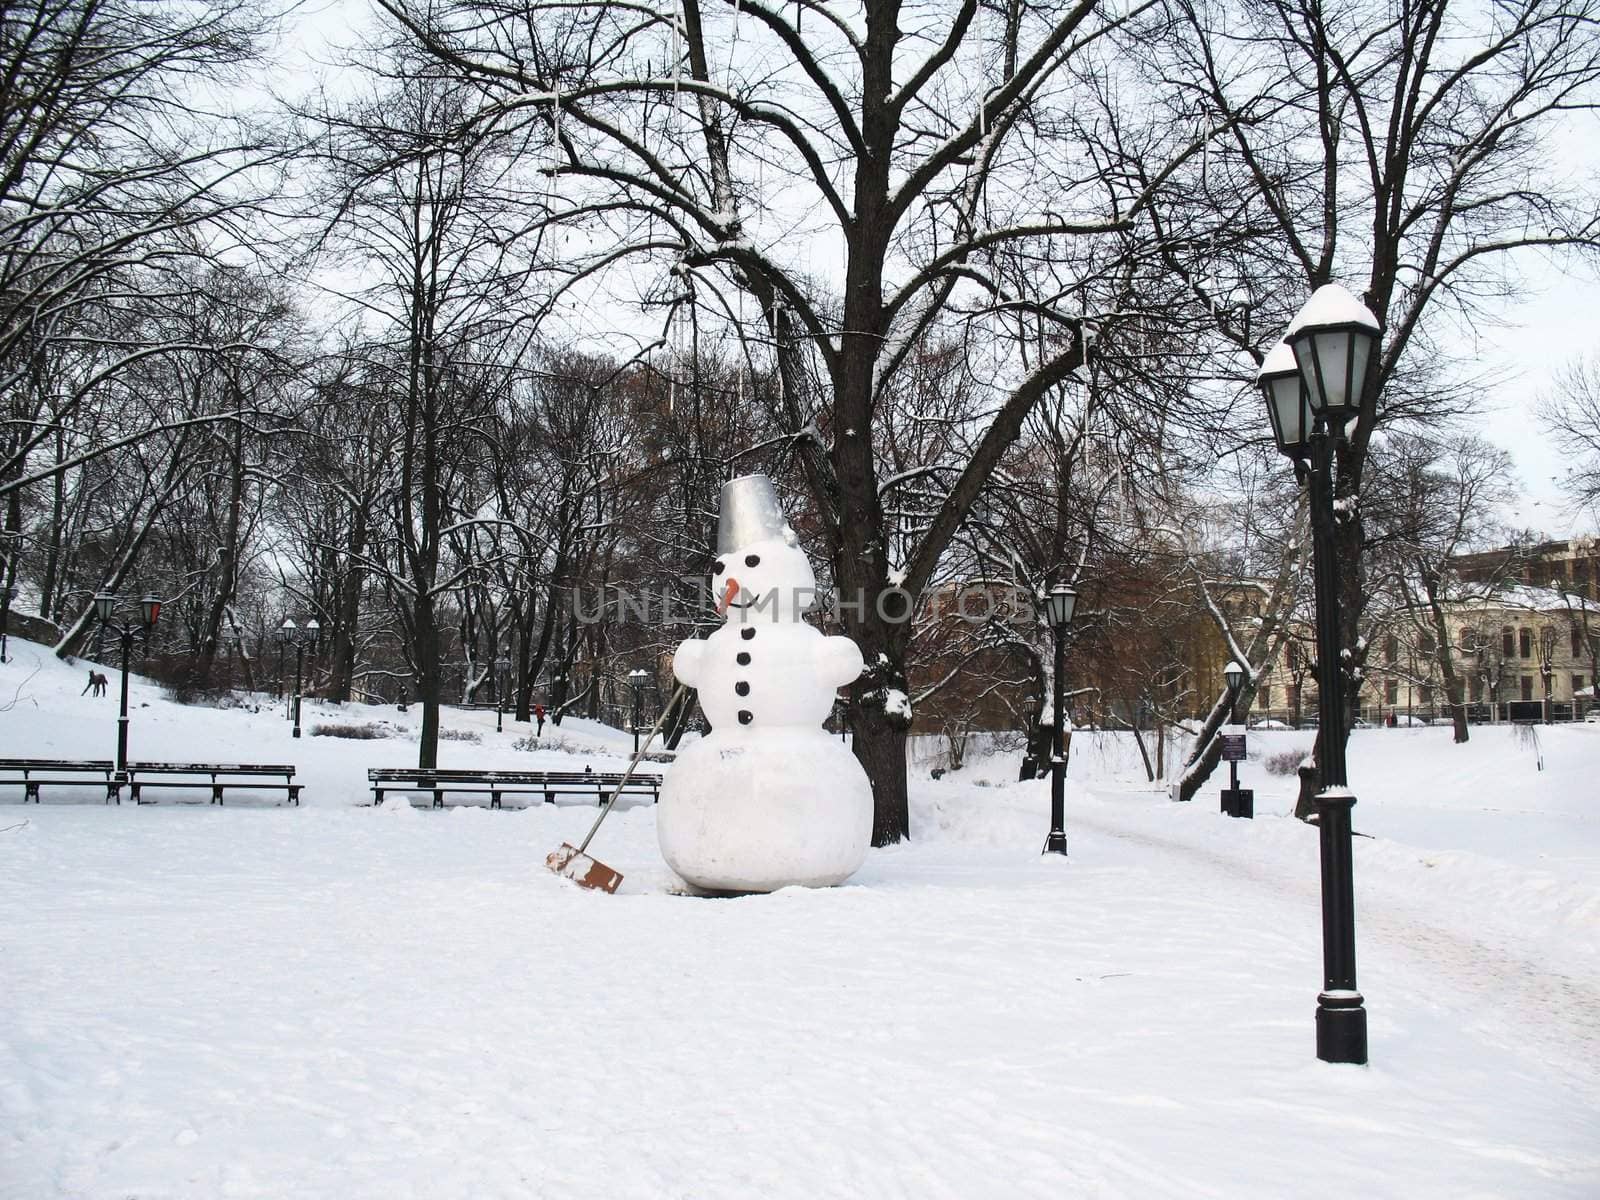 Big snowman in park in winter